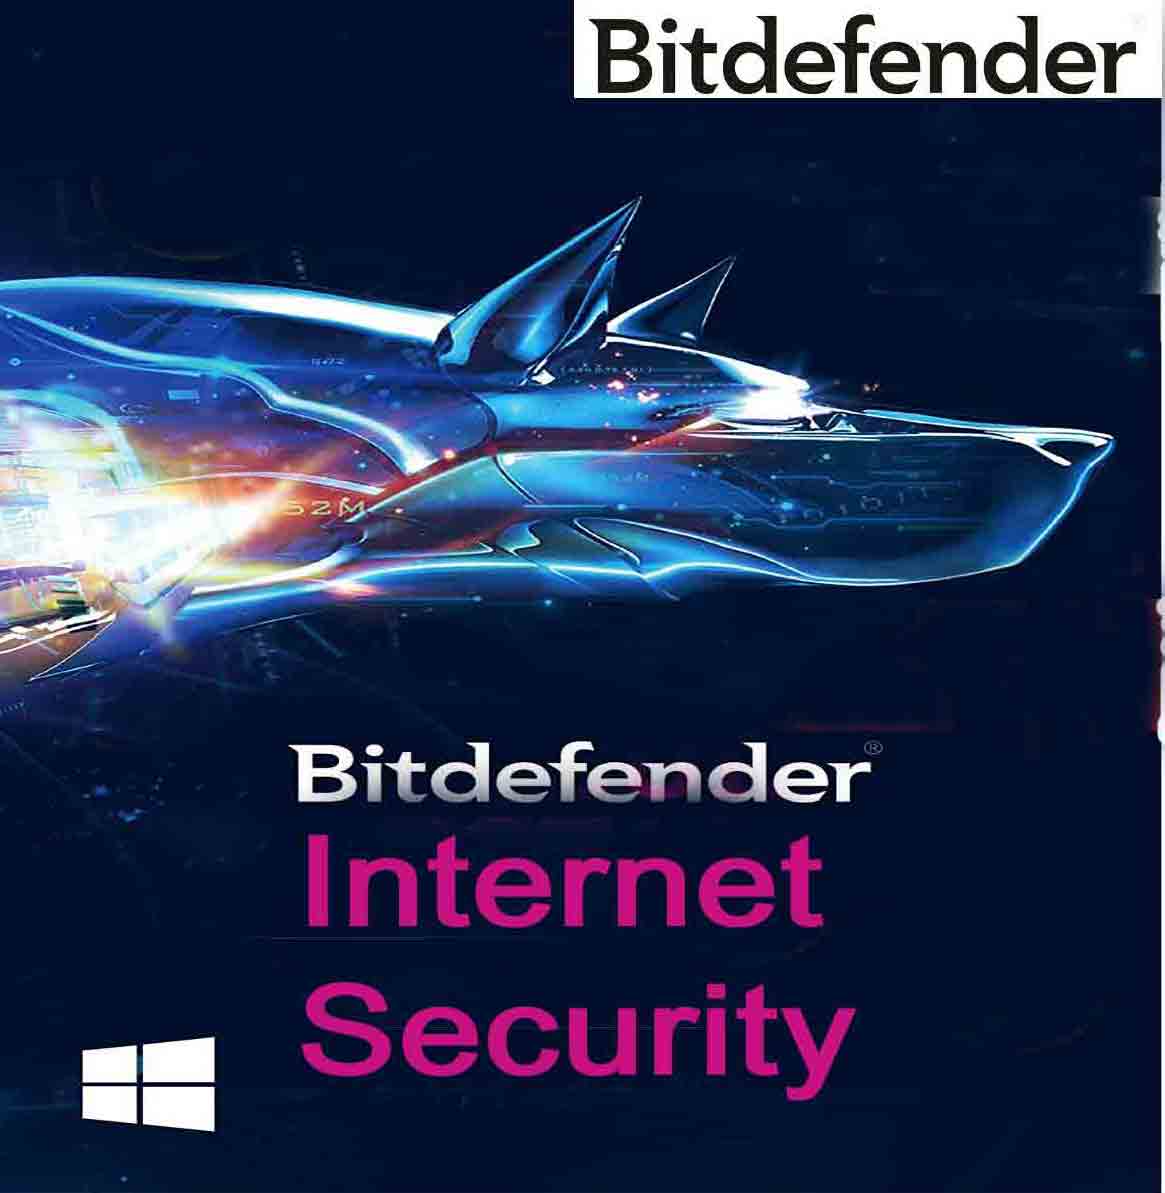 Bitdefender Internet Security License Key - 0800-090-3222 - Serial Key